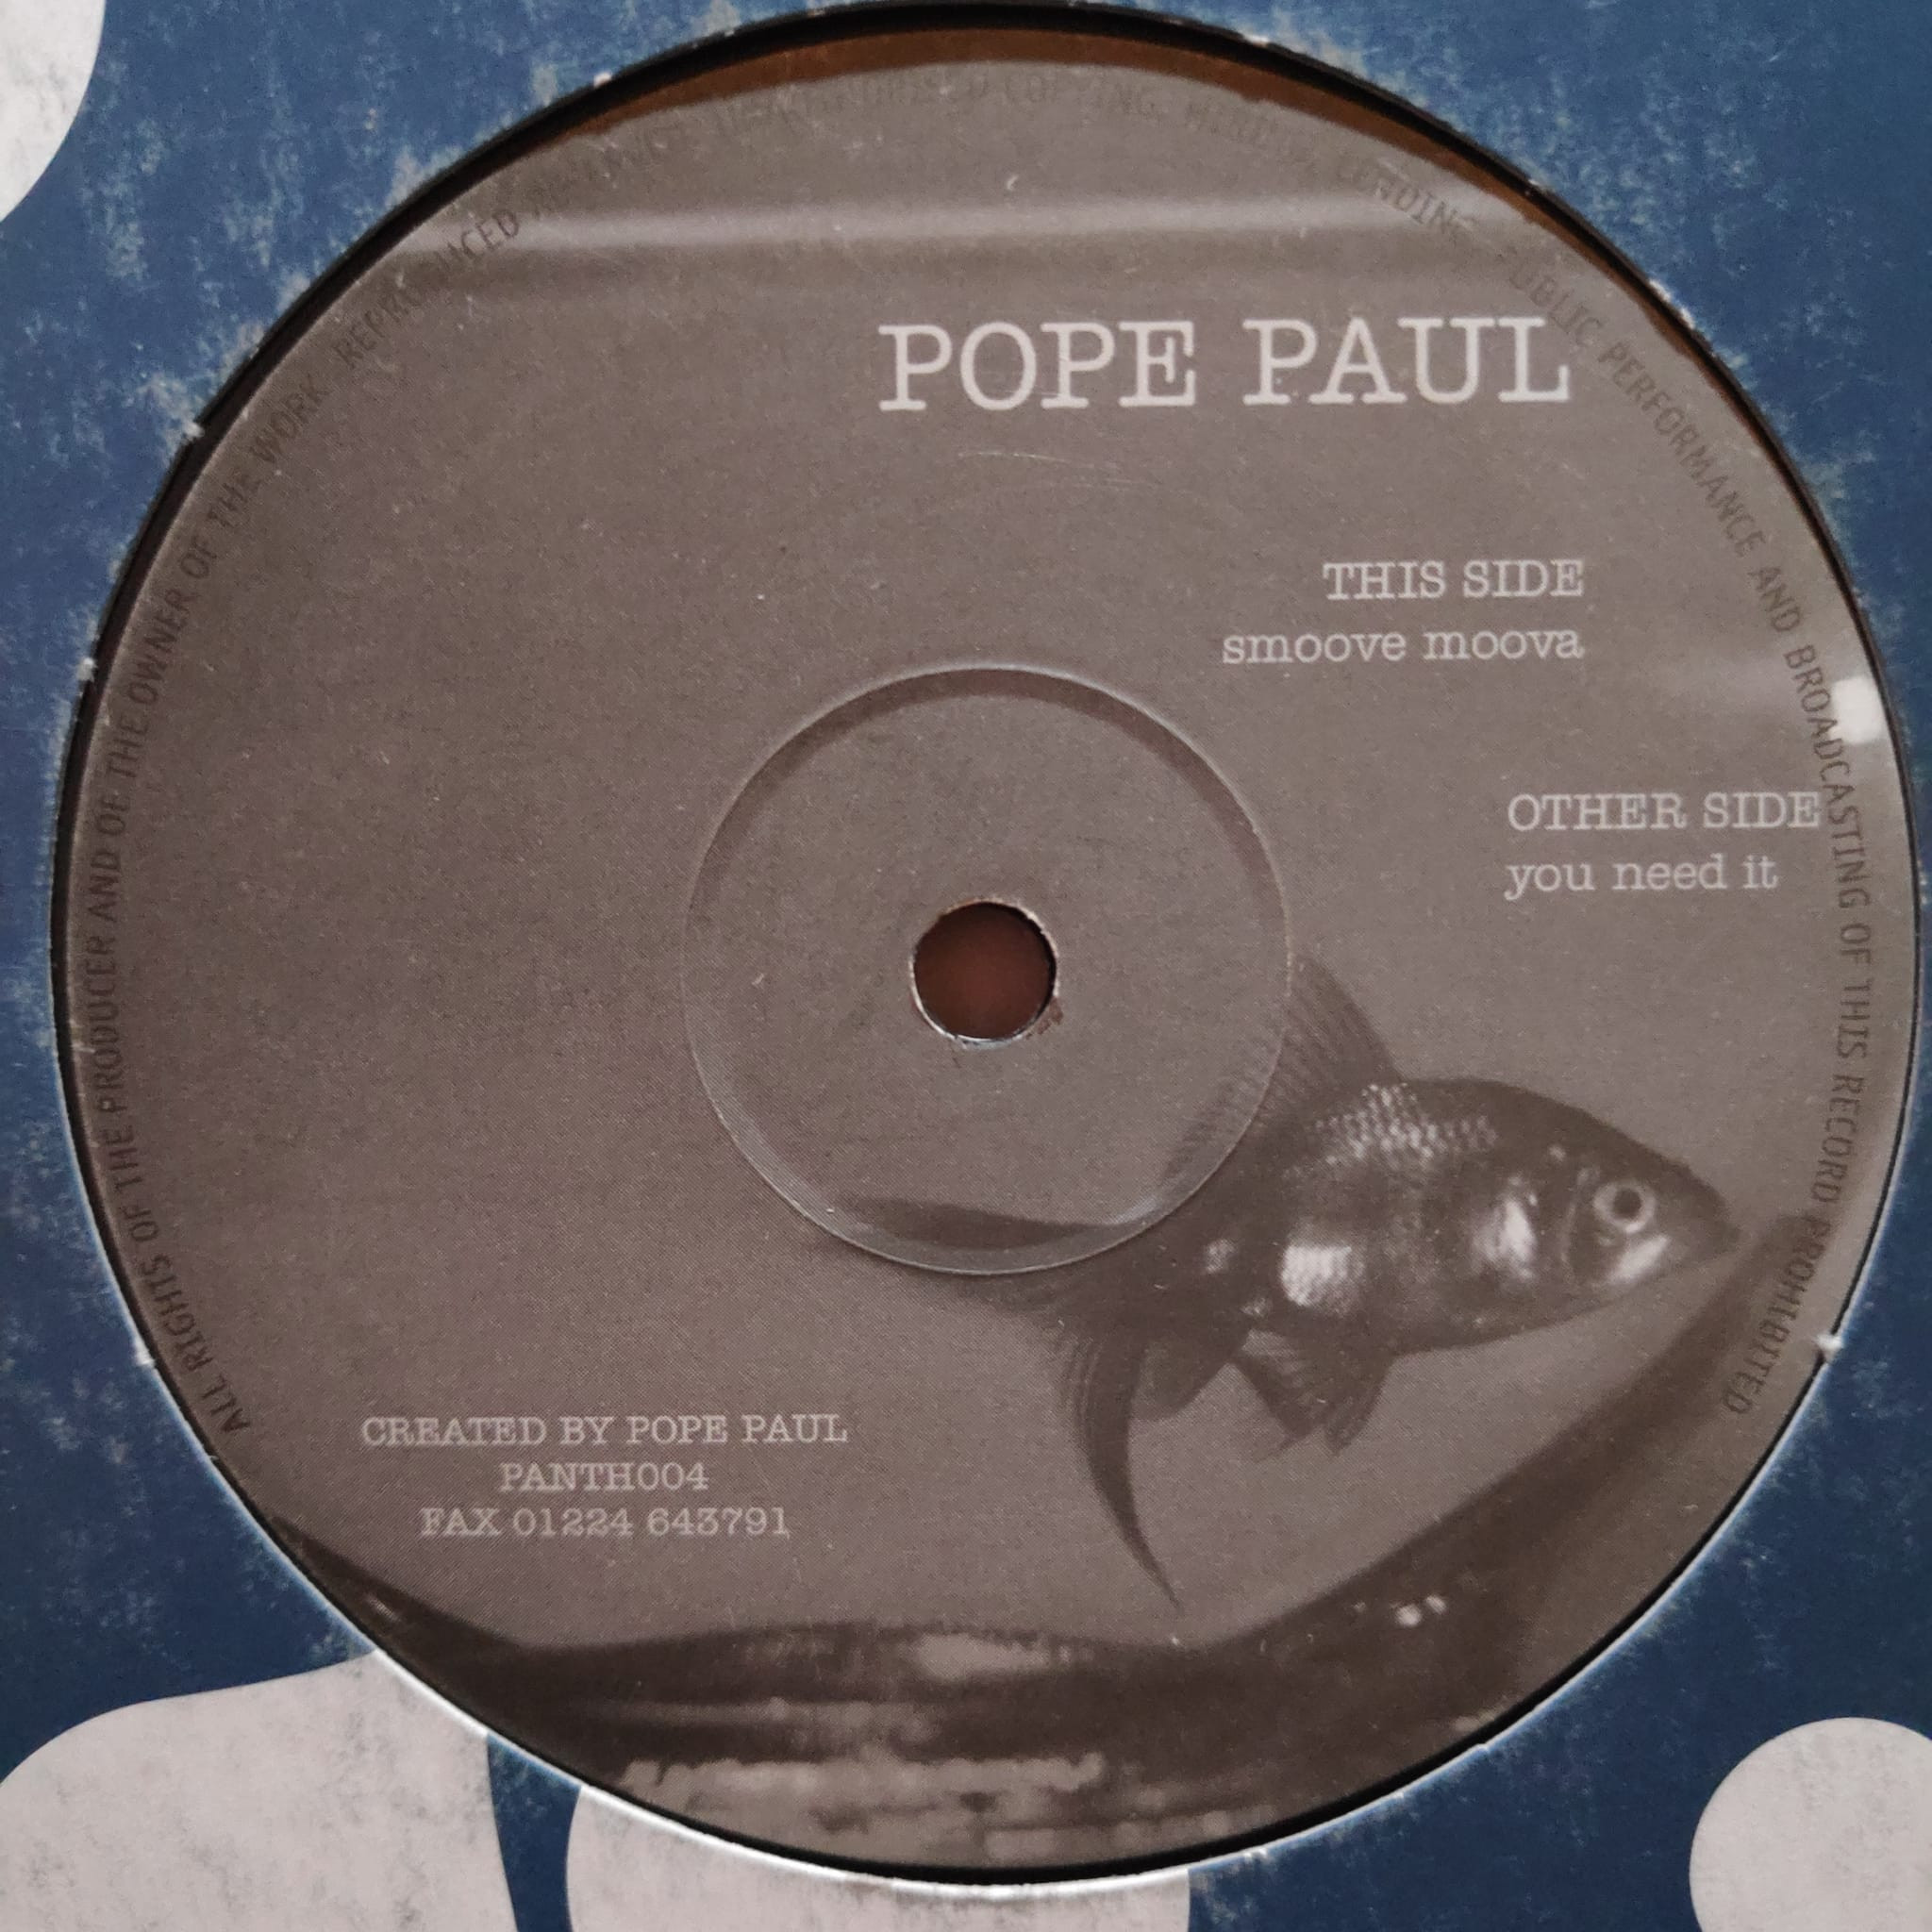 (29911) Pope Paul ‎– You Need It / Smoove Moova